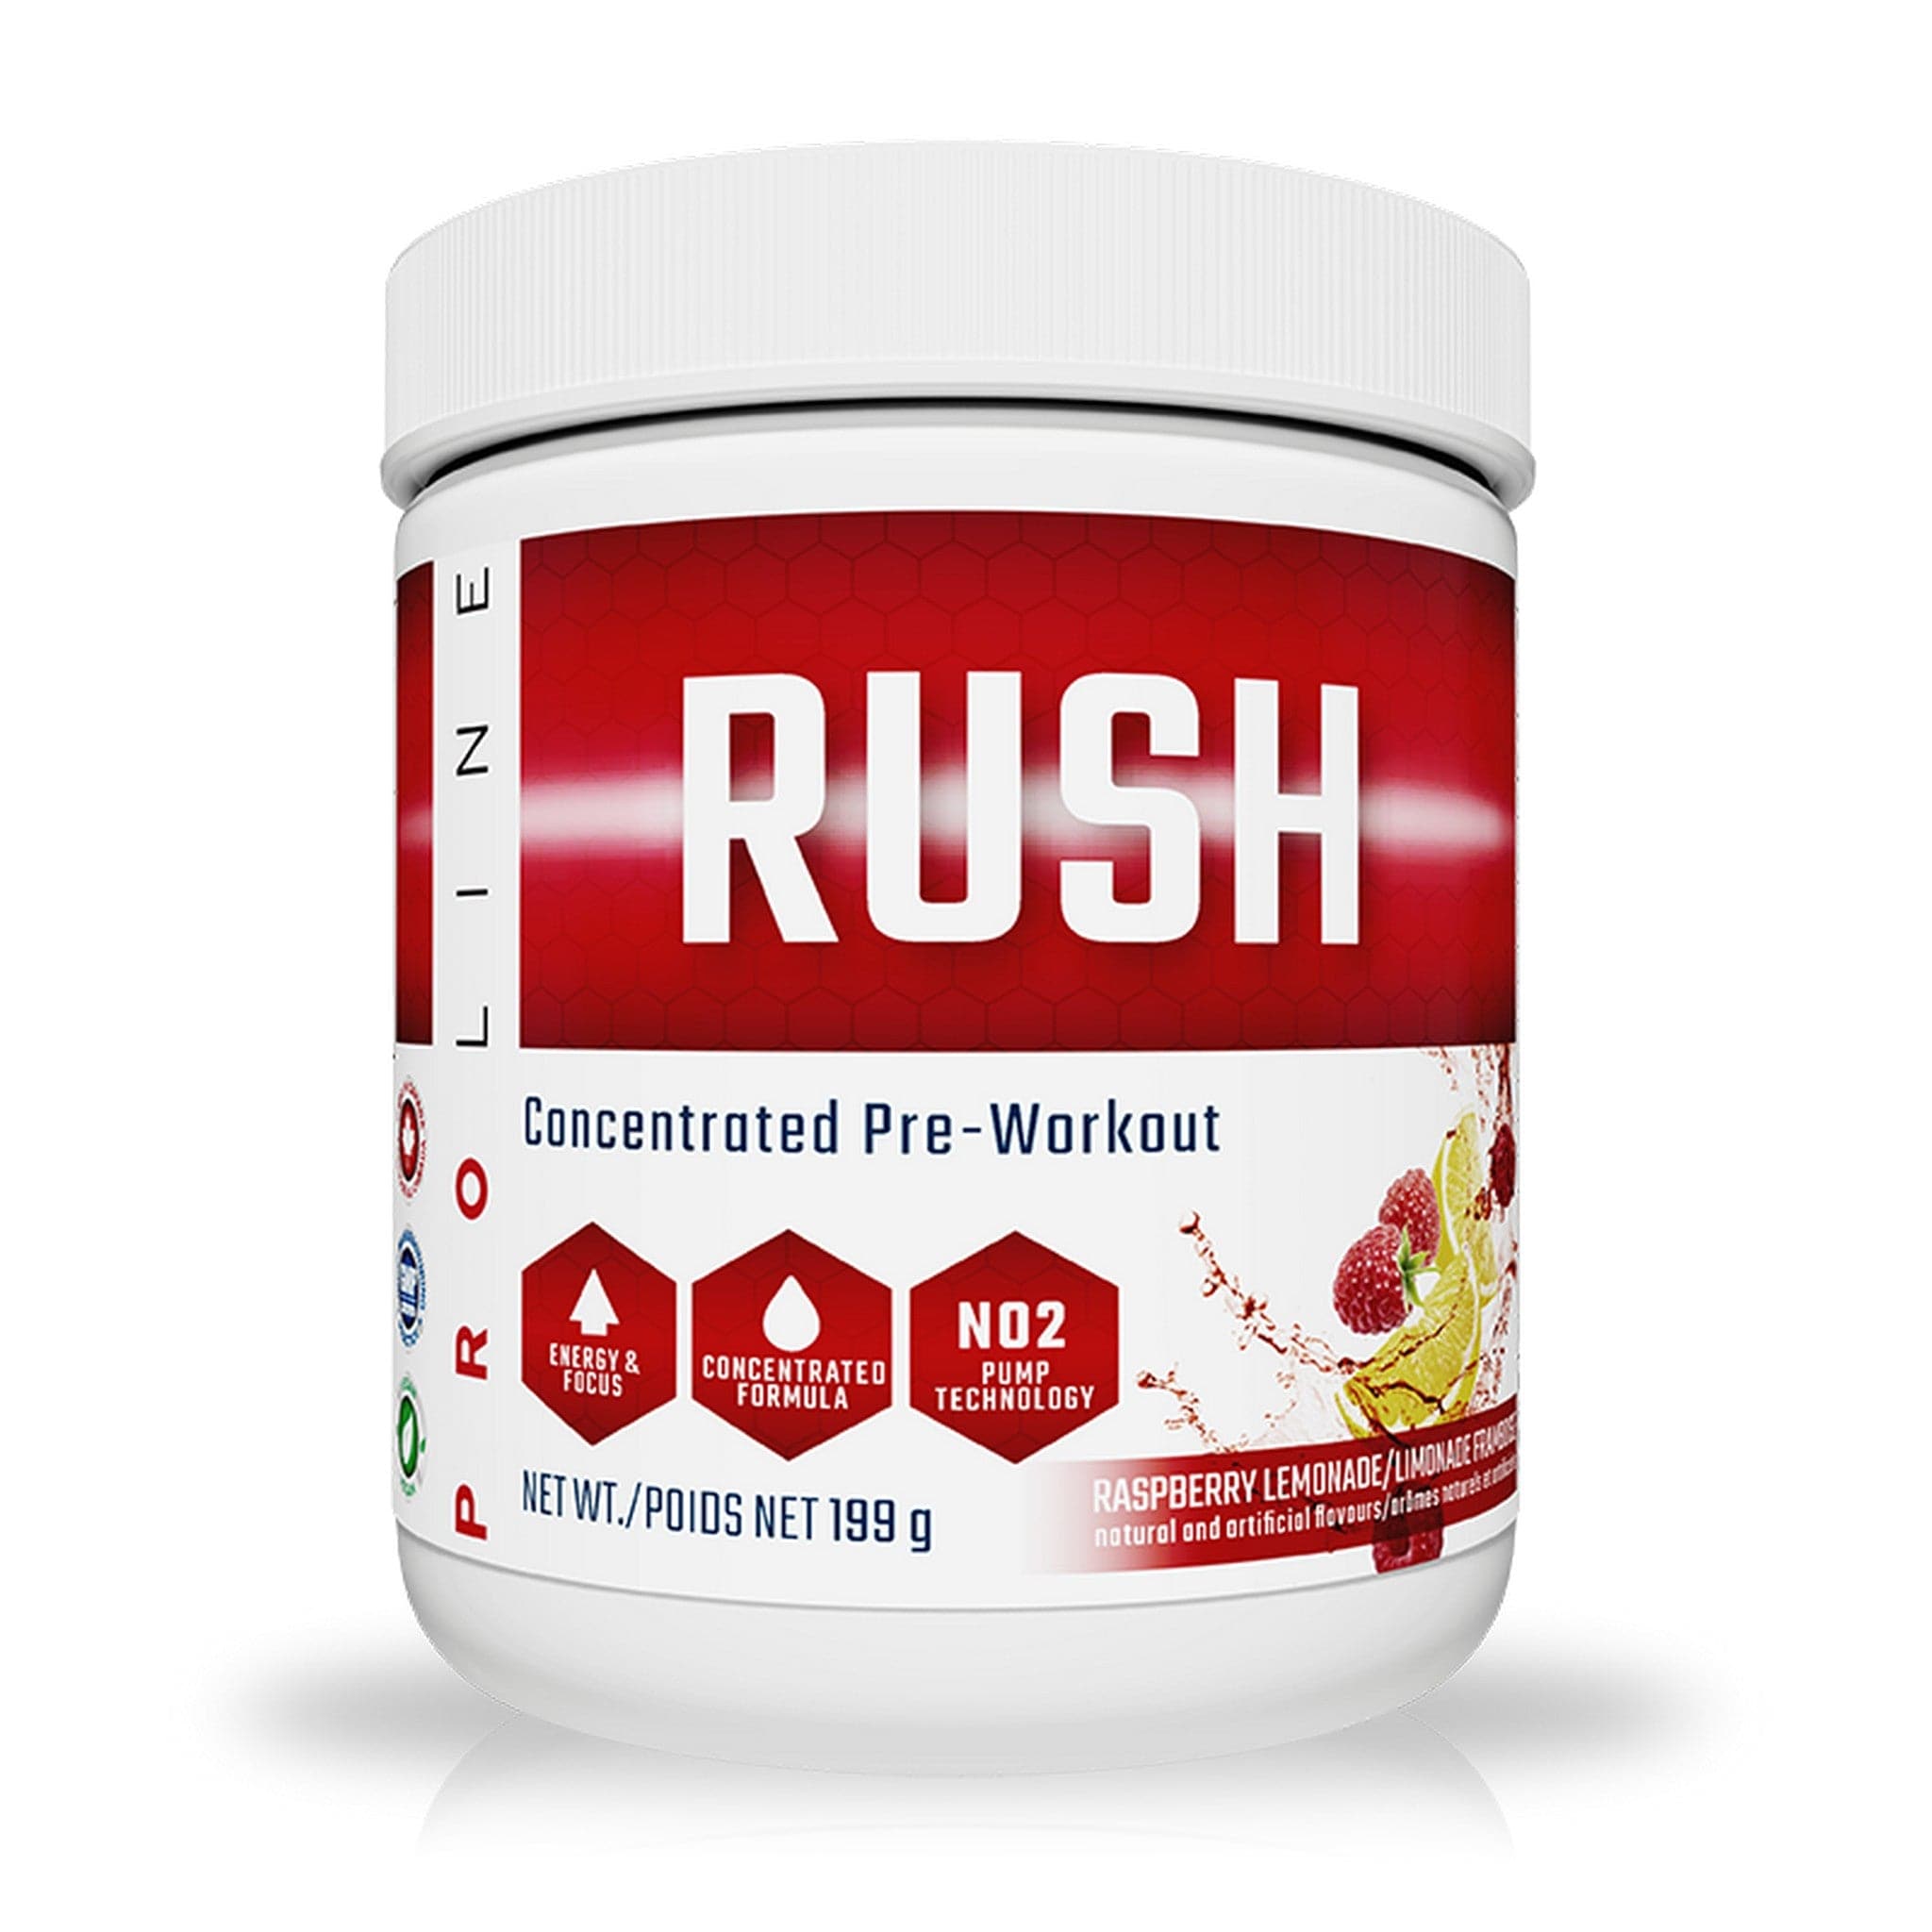 Proline Rush Pre-Workout 30 servings